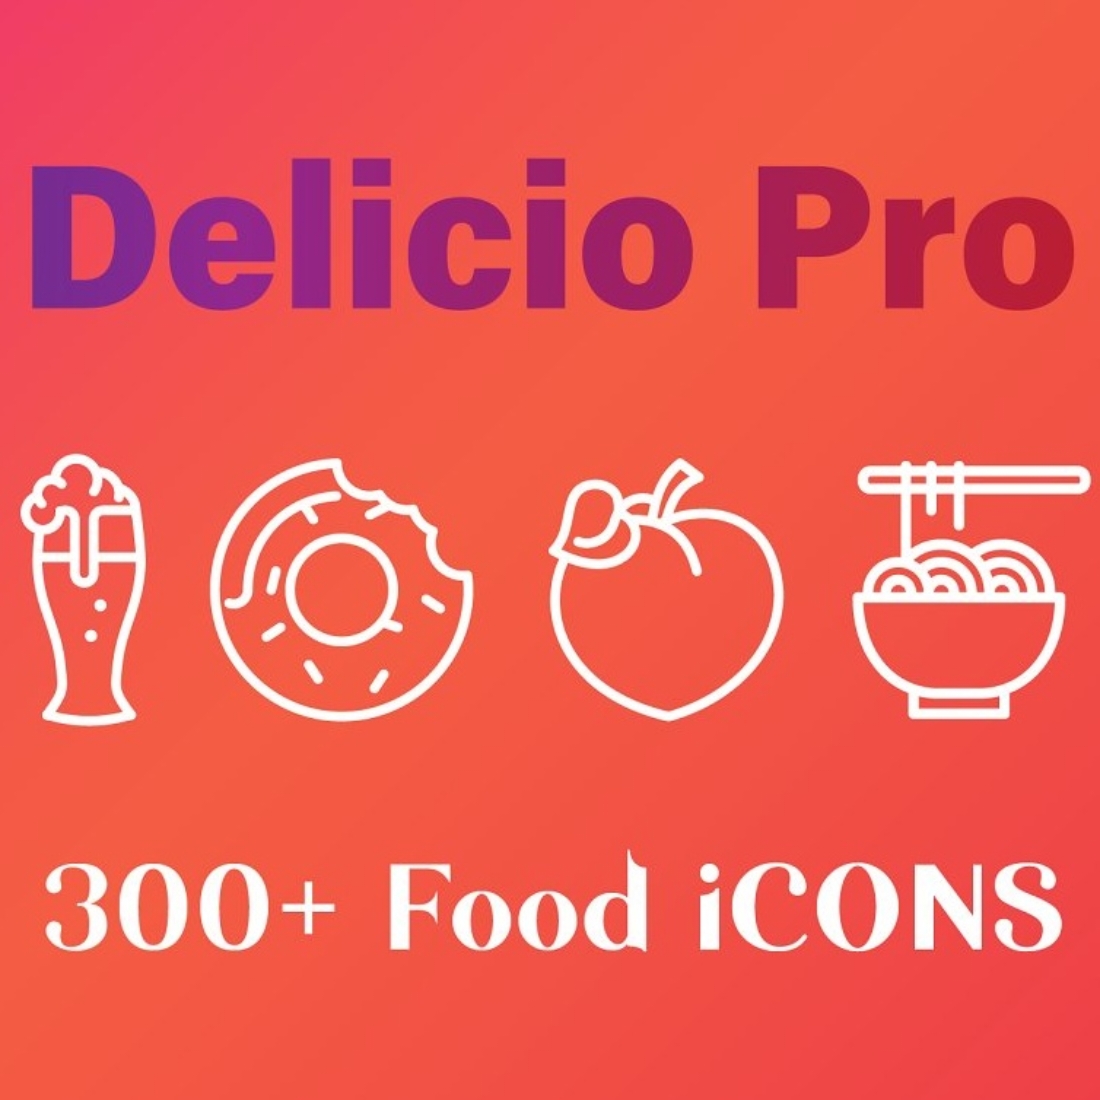 Delicio Pro - Food Icons cover image.